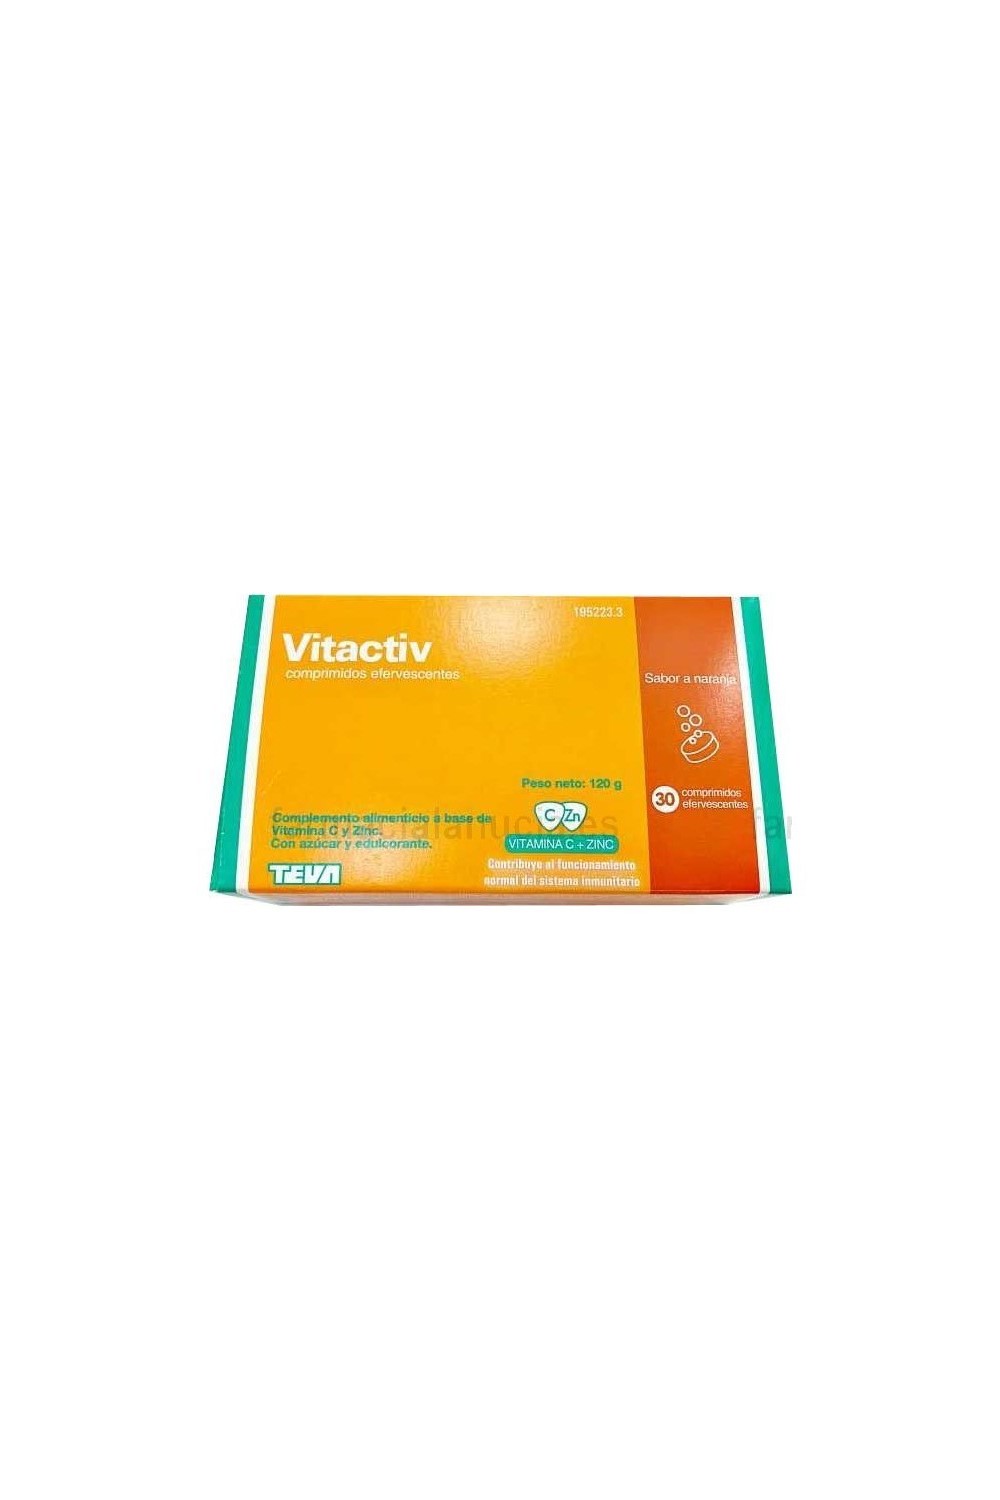 TEVA PHARMA - Teva Vitactiv 30 Effervescent Tablets 120g